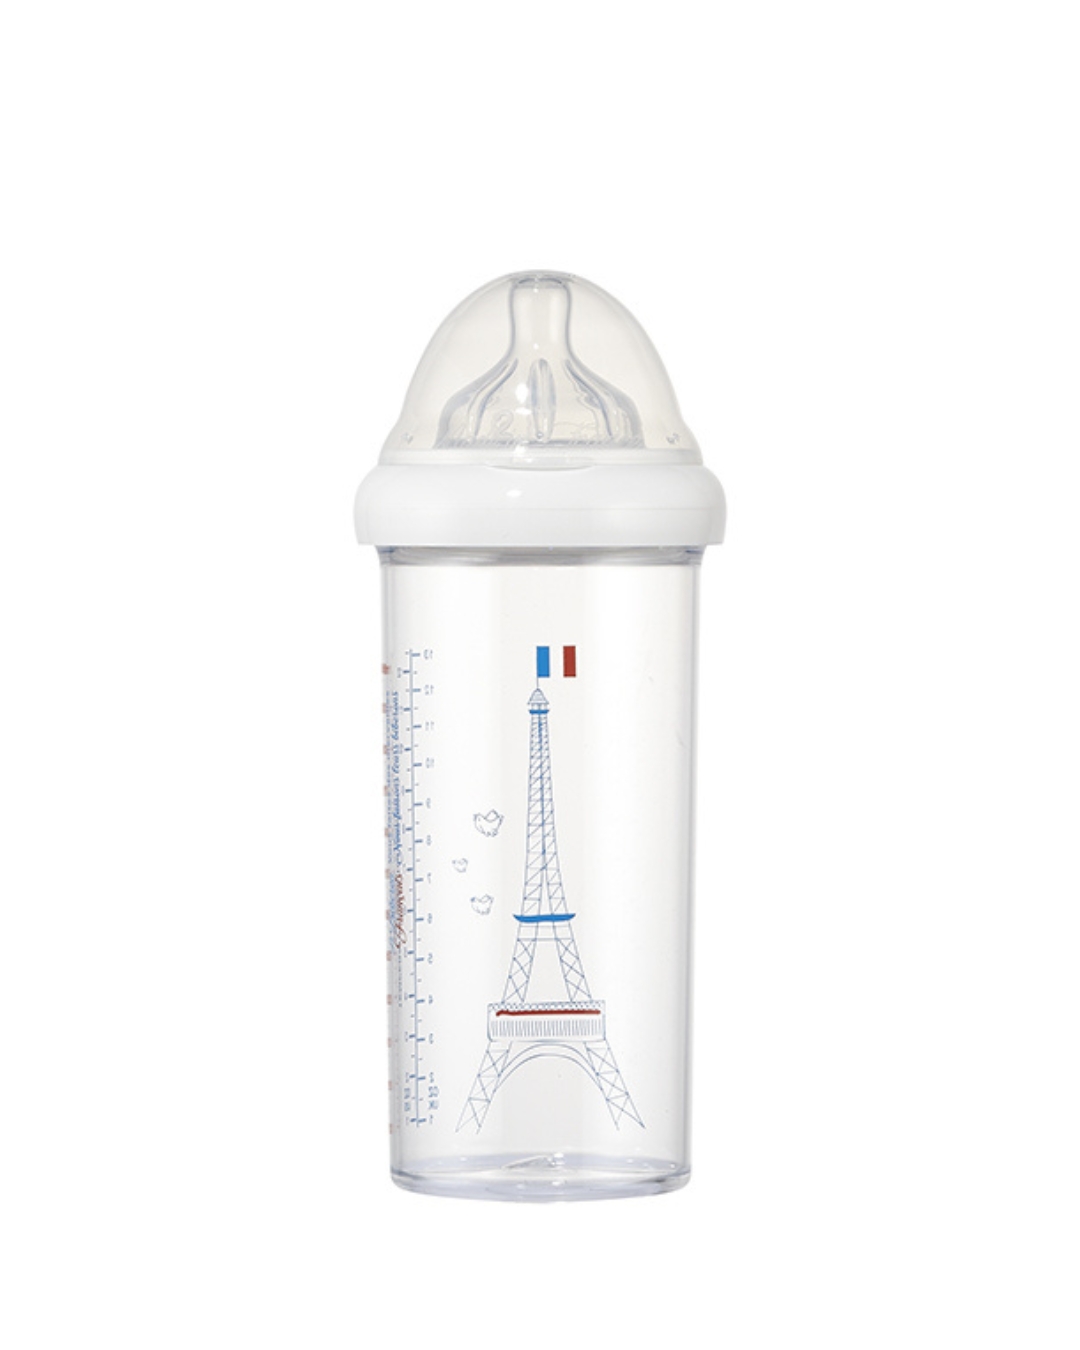 Biberon 360 ml au motif Ours polaire - 100% Made in France - Le